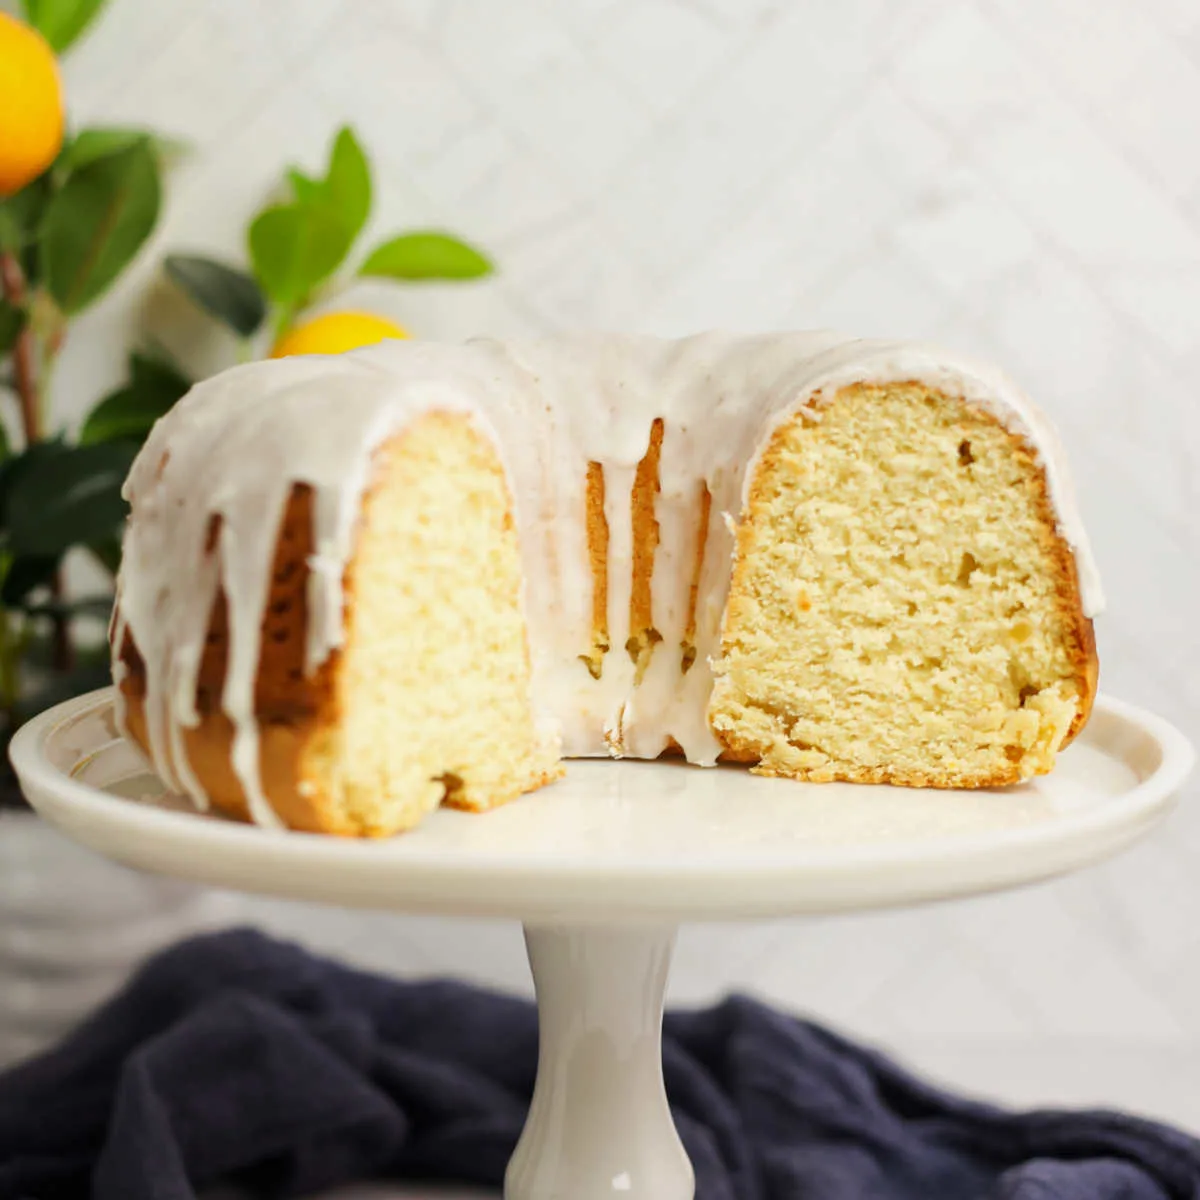 2/3 of lemon bundt cake with white glaze and soft yellow interior showing.